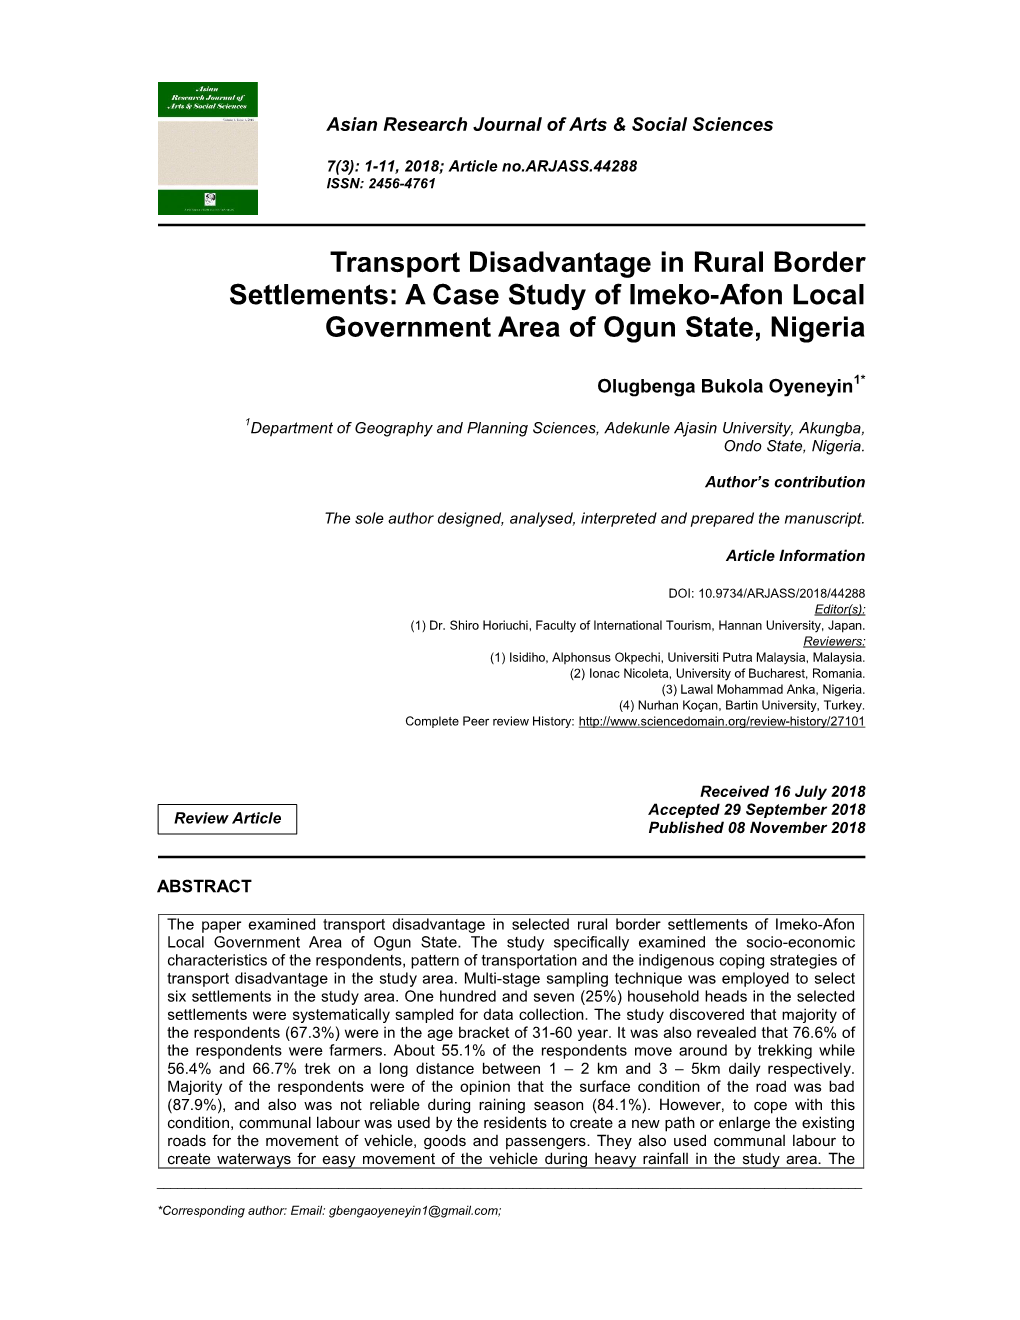 A Case Study of Imeko-Afon Local Government Area of Ogun State, Nigeria